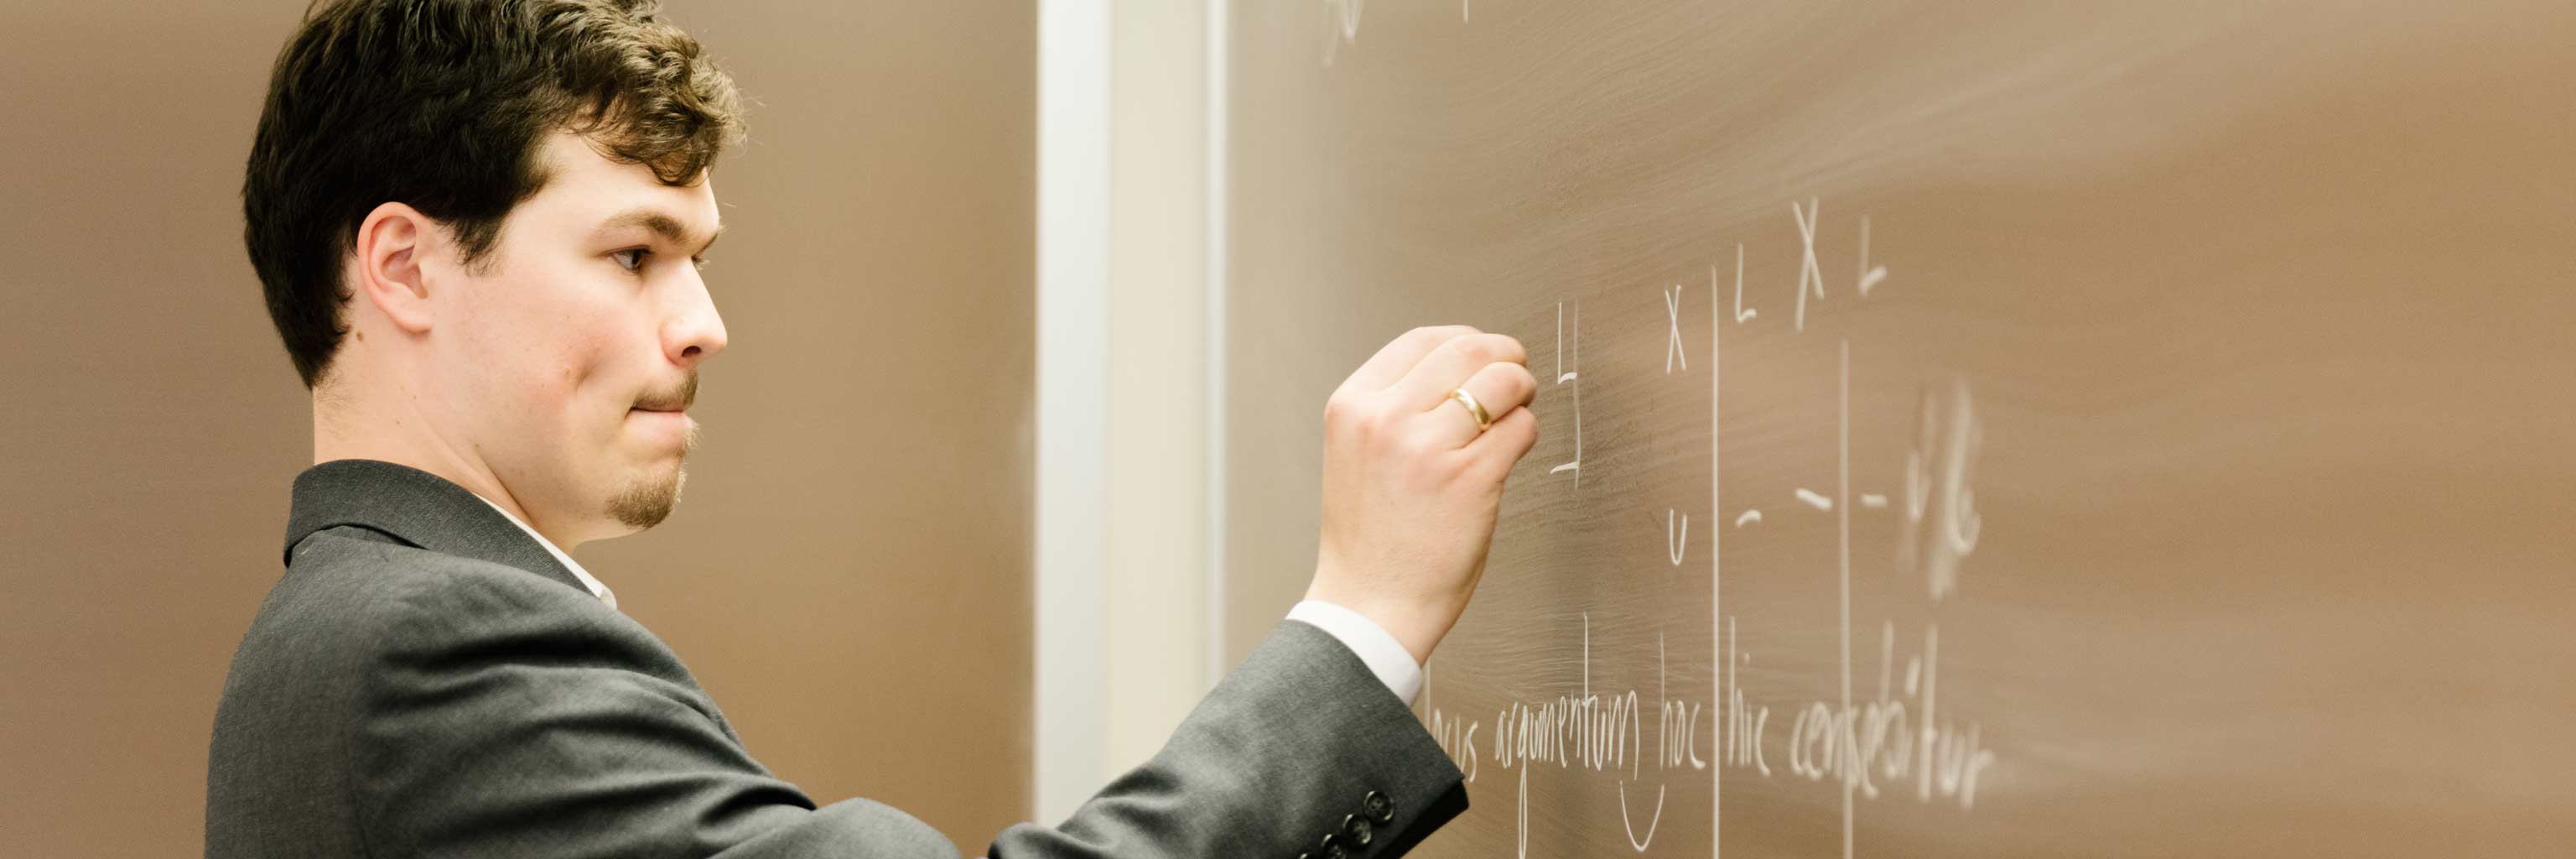 A student writing Latin on a chalkboard.